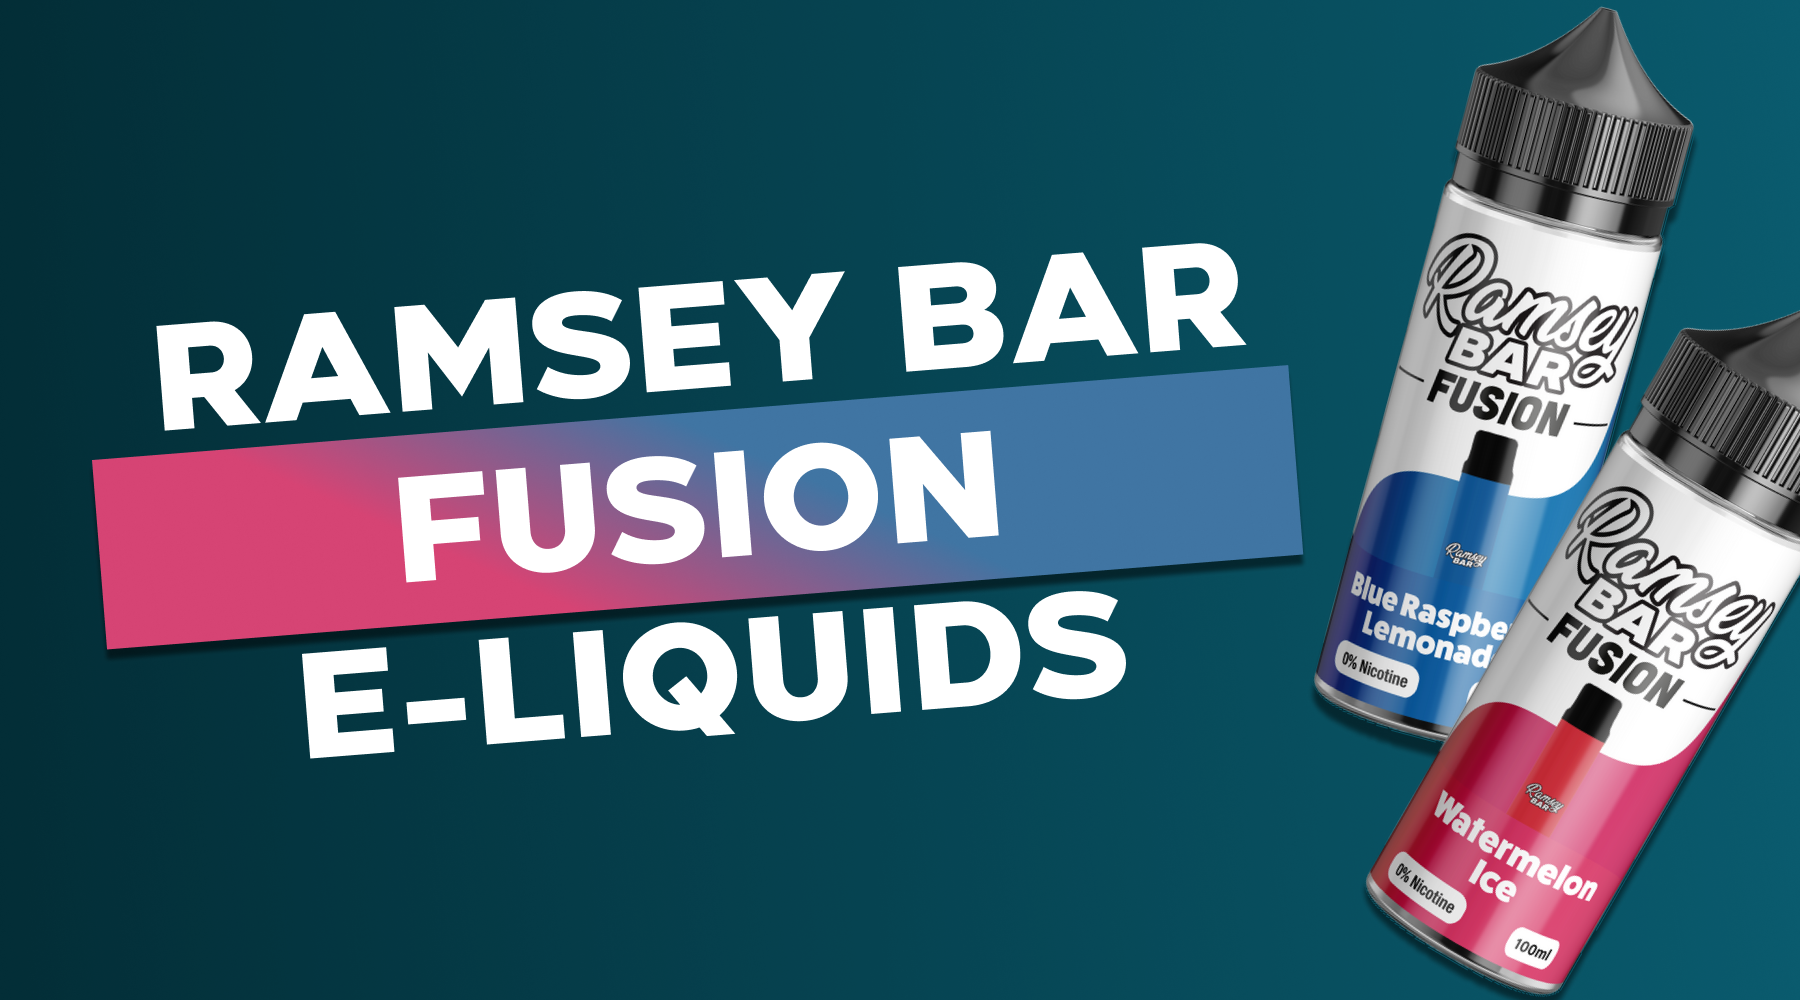 Ramsey Bar Fusion